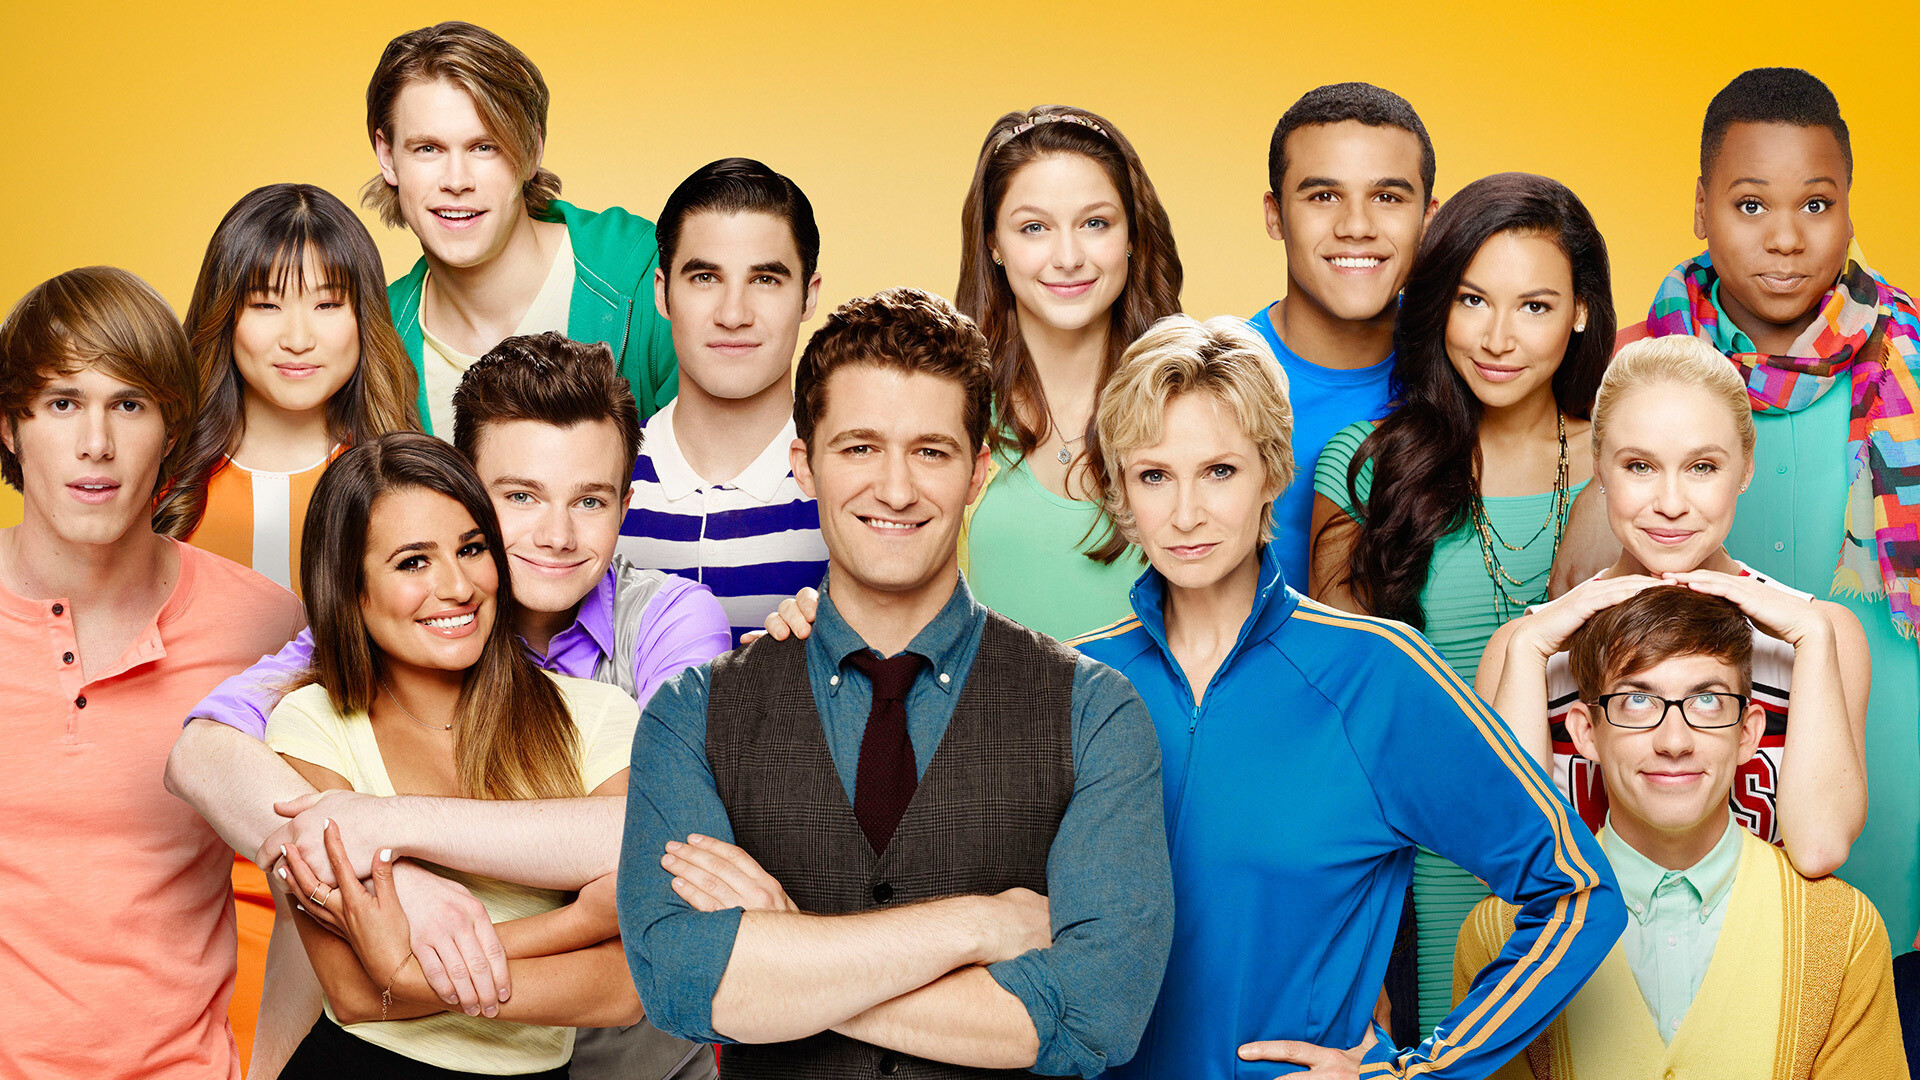 Glee (TV series): Jacob Artist as Jake Puckerman, Melissa Benoist as Marley Rose, Blake Jenner as Ryder Lynn. 1920x1080 Full HD Wallpaper.